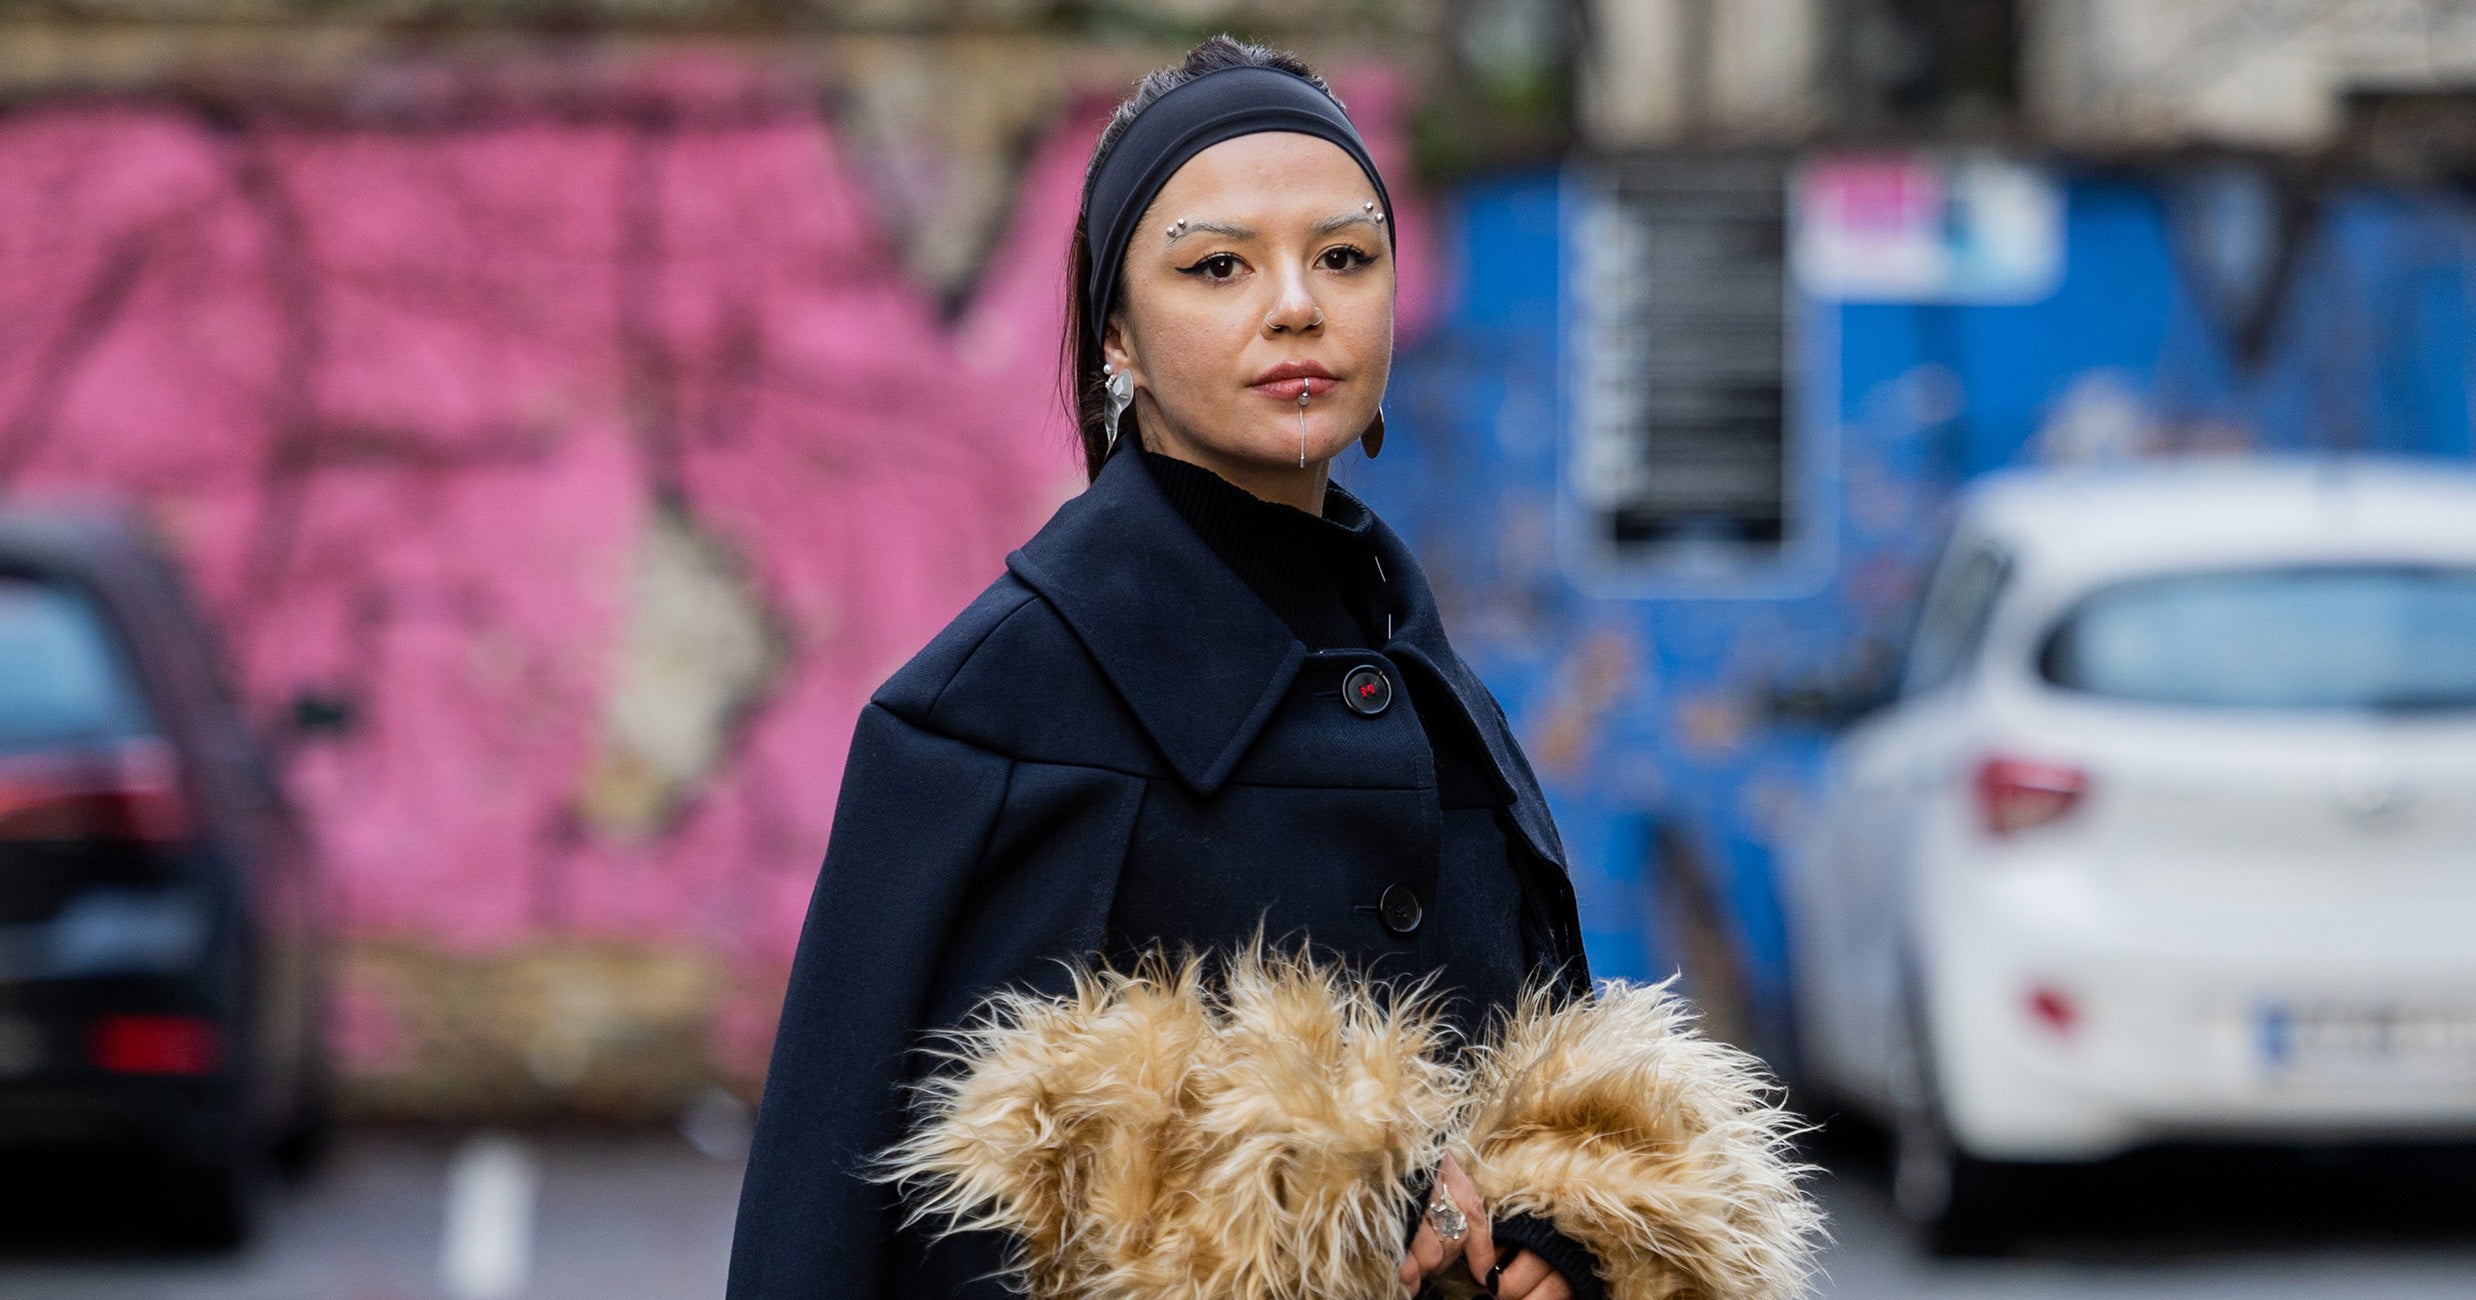 The Best Winter Street Style At Copenhagen Fashion Week